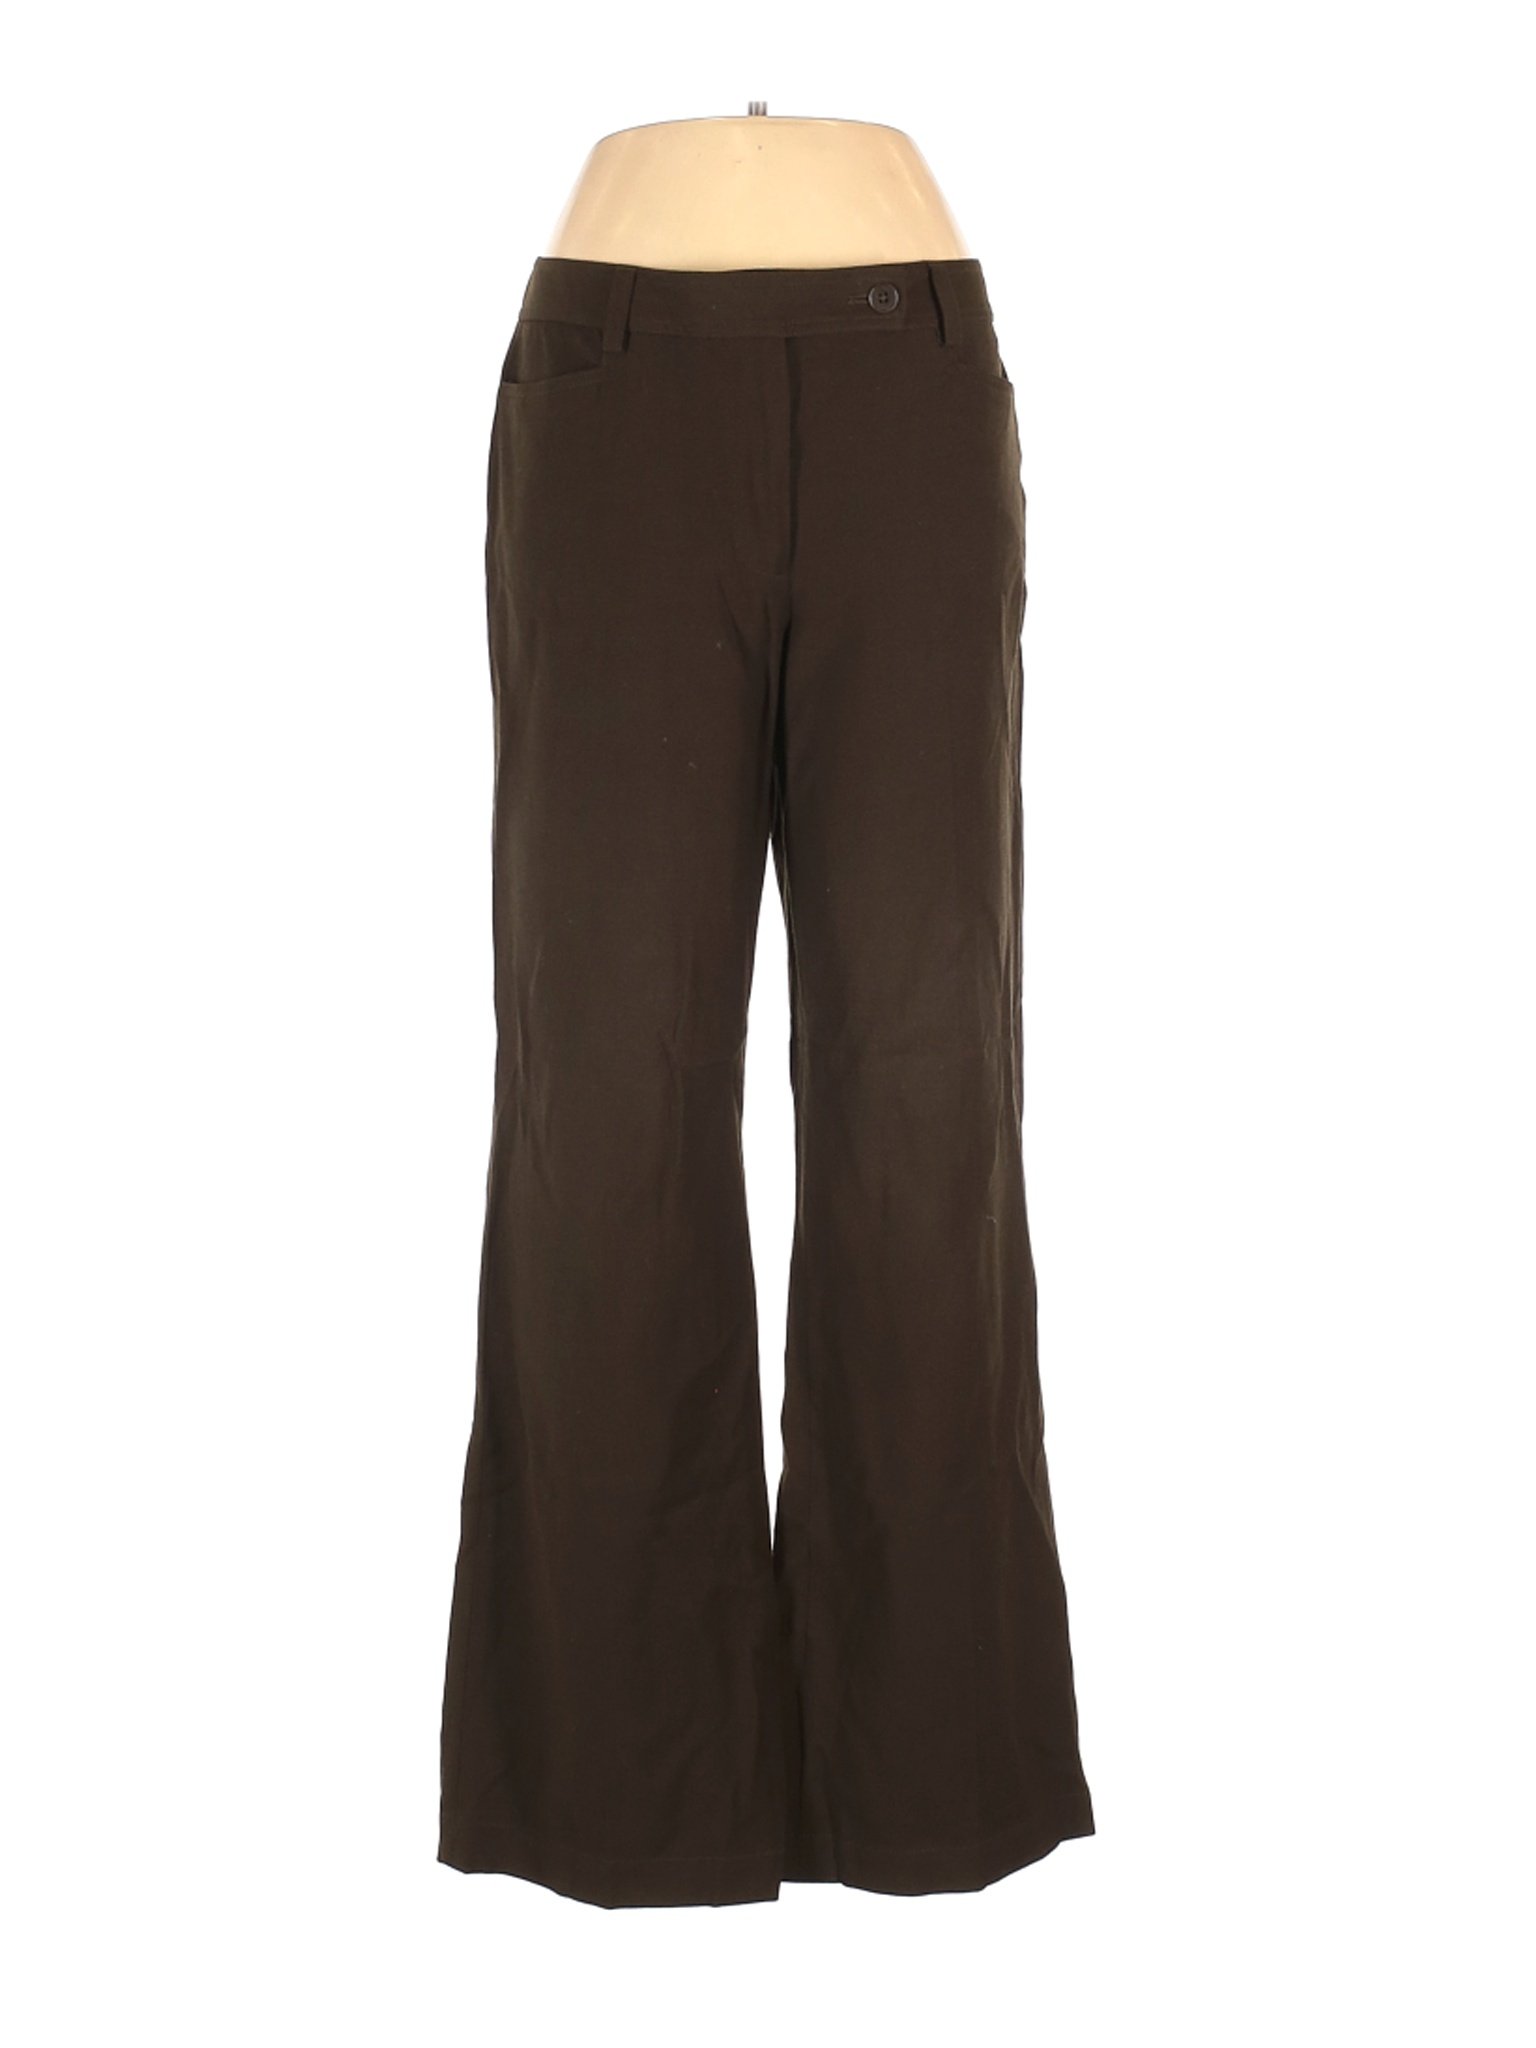 Talbots Women Brown Casual Pants 8 | eBay